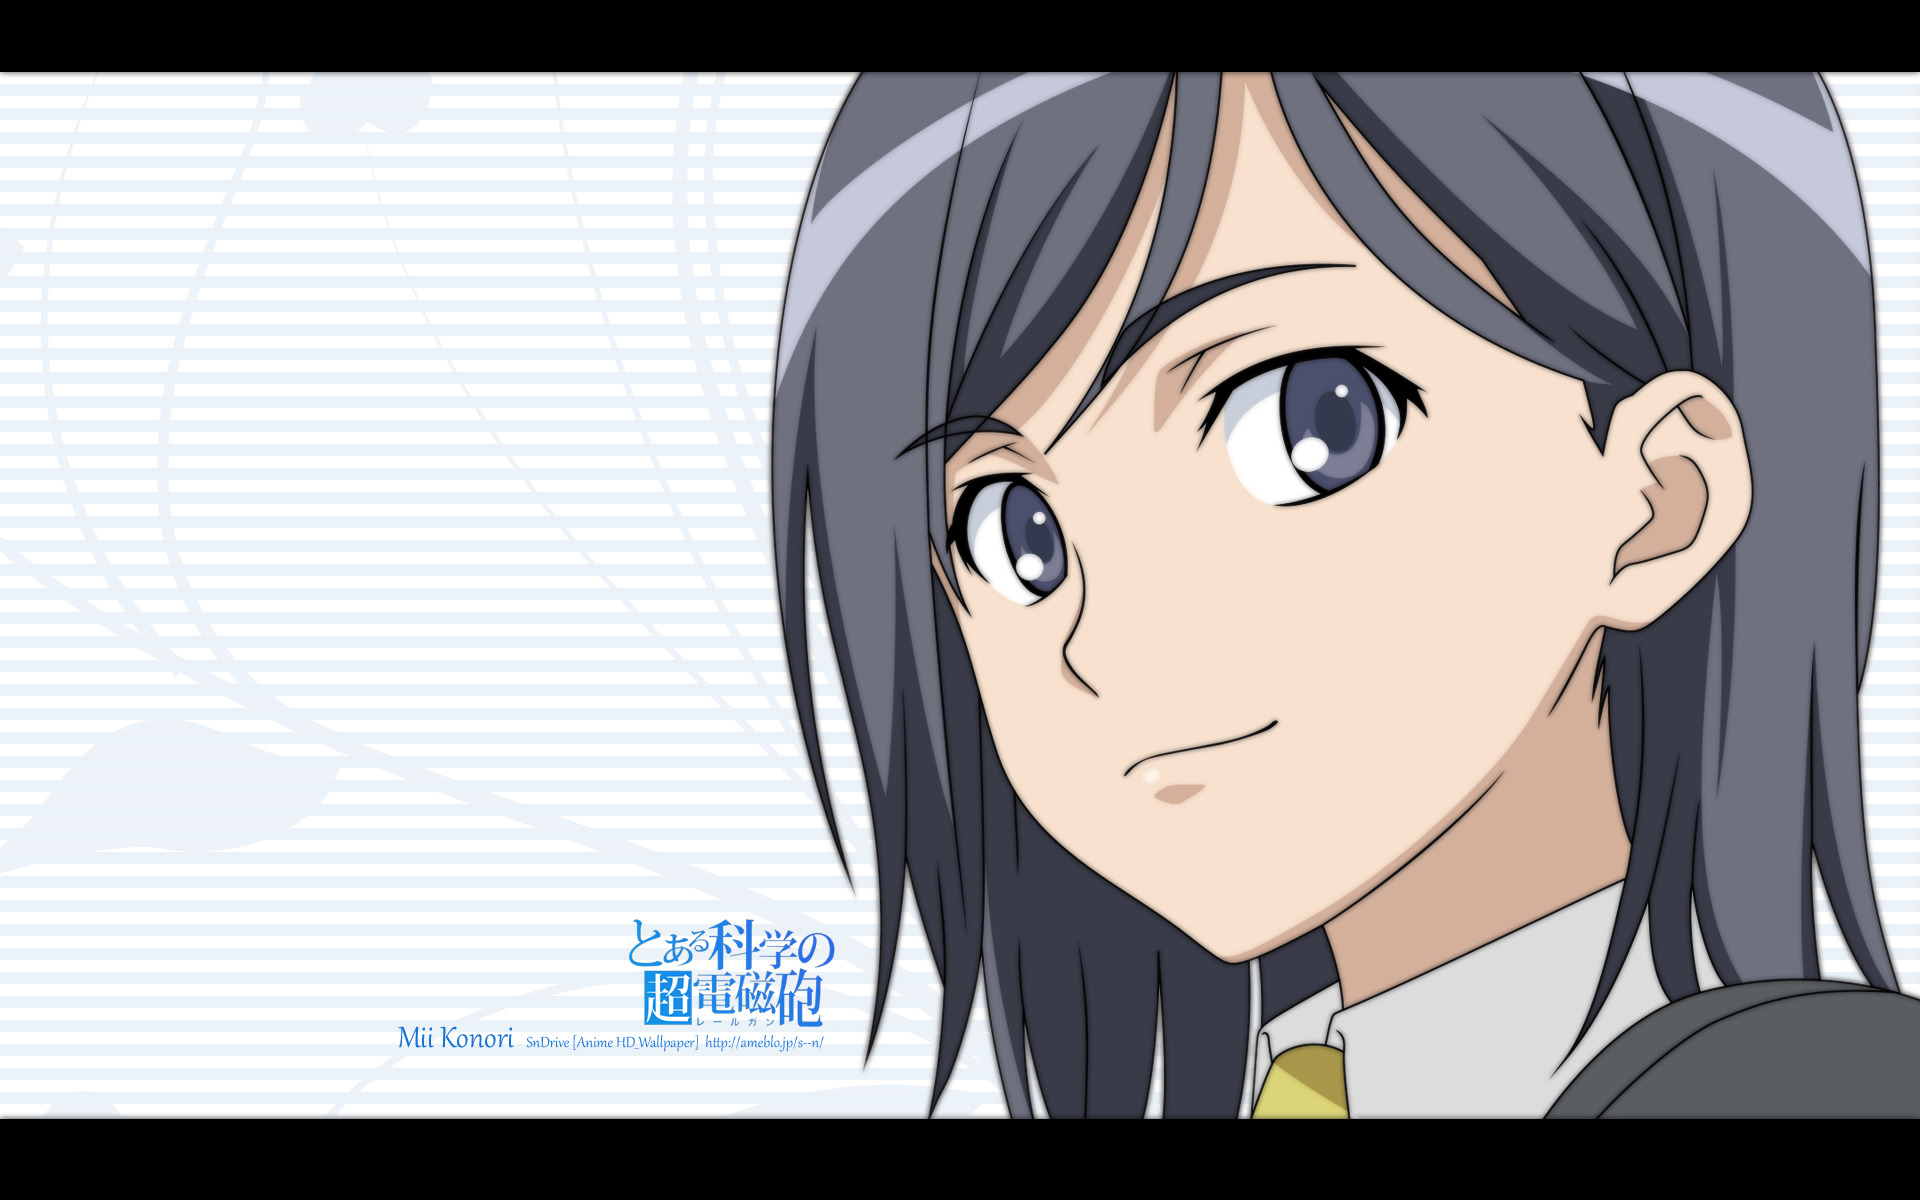 Anime character from A Certain Scientific Railgun, set as desktop wallpaper.